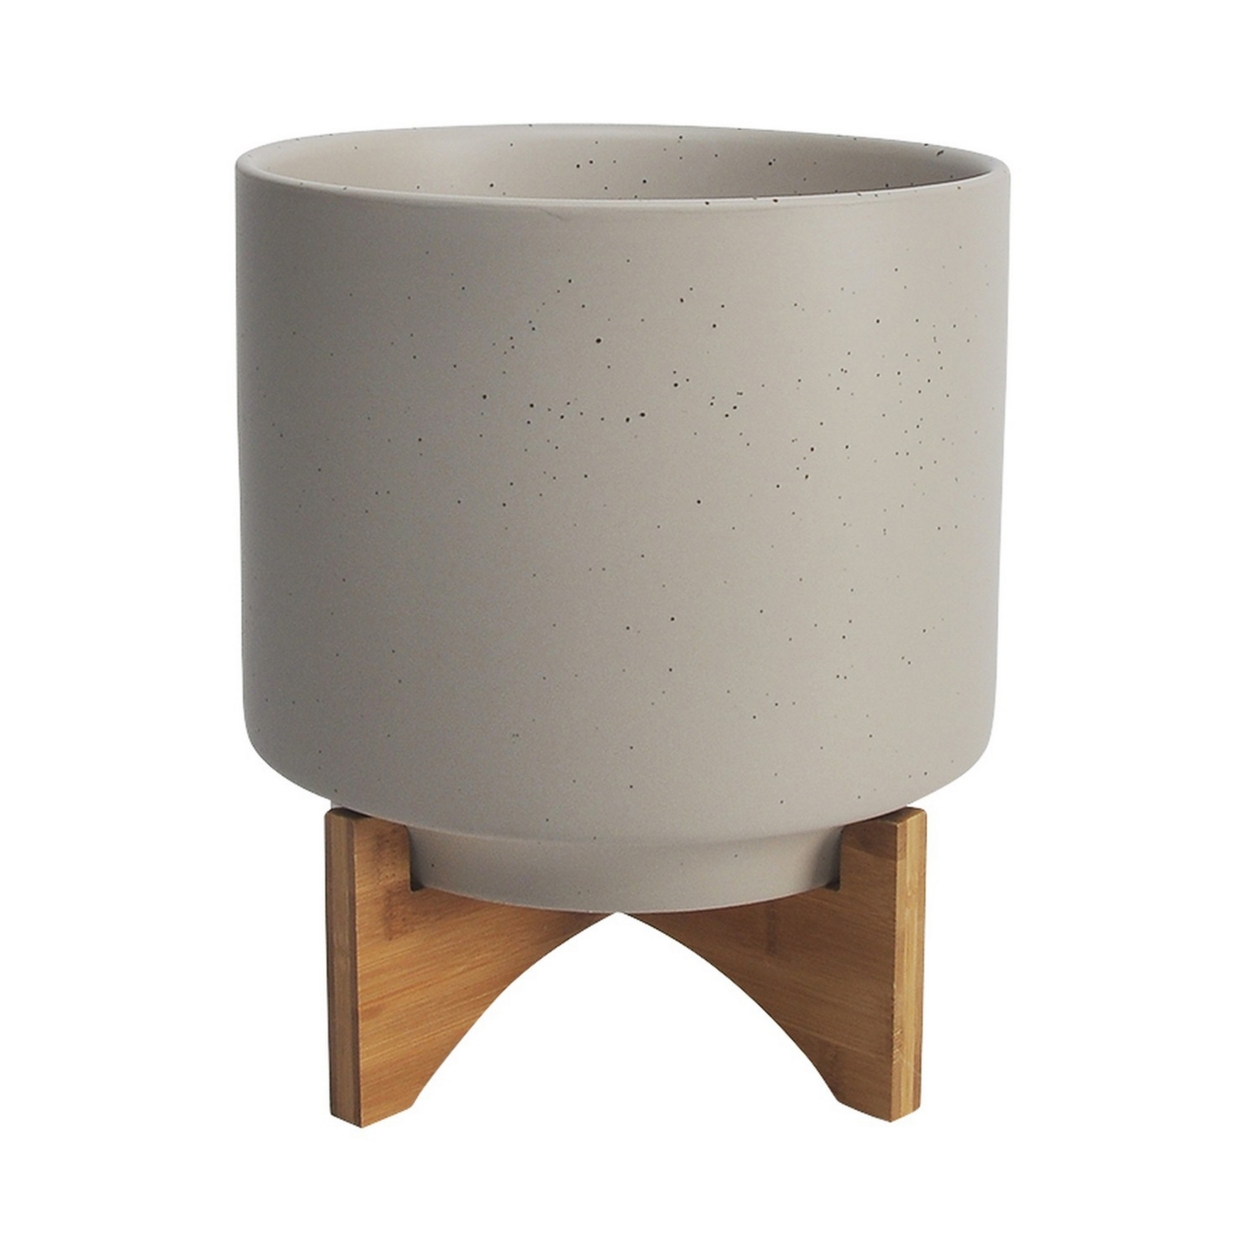 Ceramic Planter With Terrazzo Design And Wooden Stand, Large, Light Beige- Saltoro Sherpi